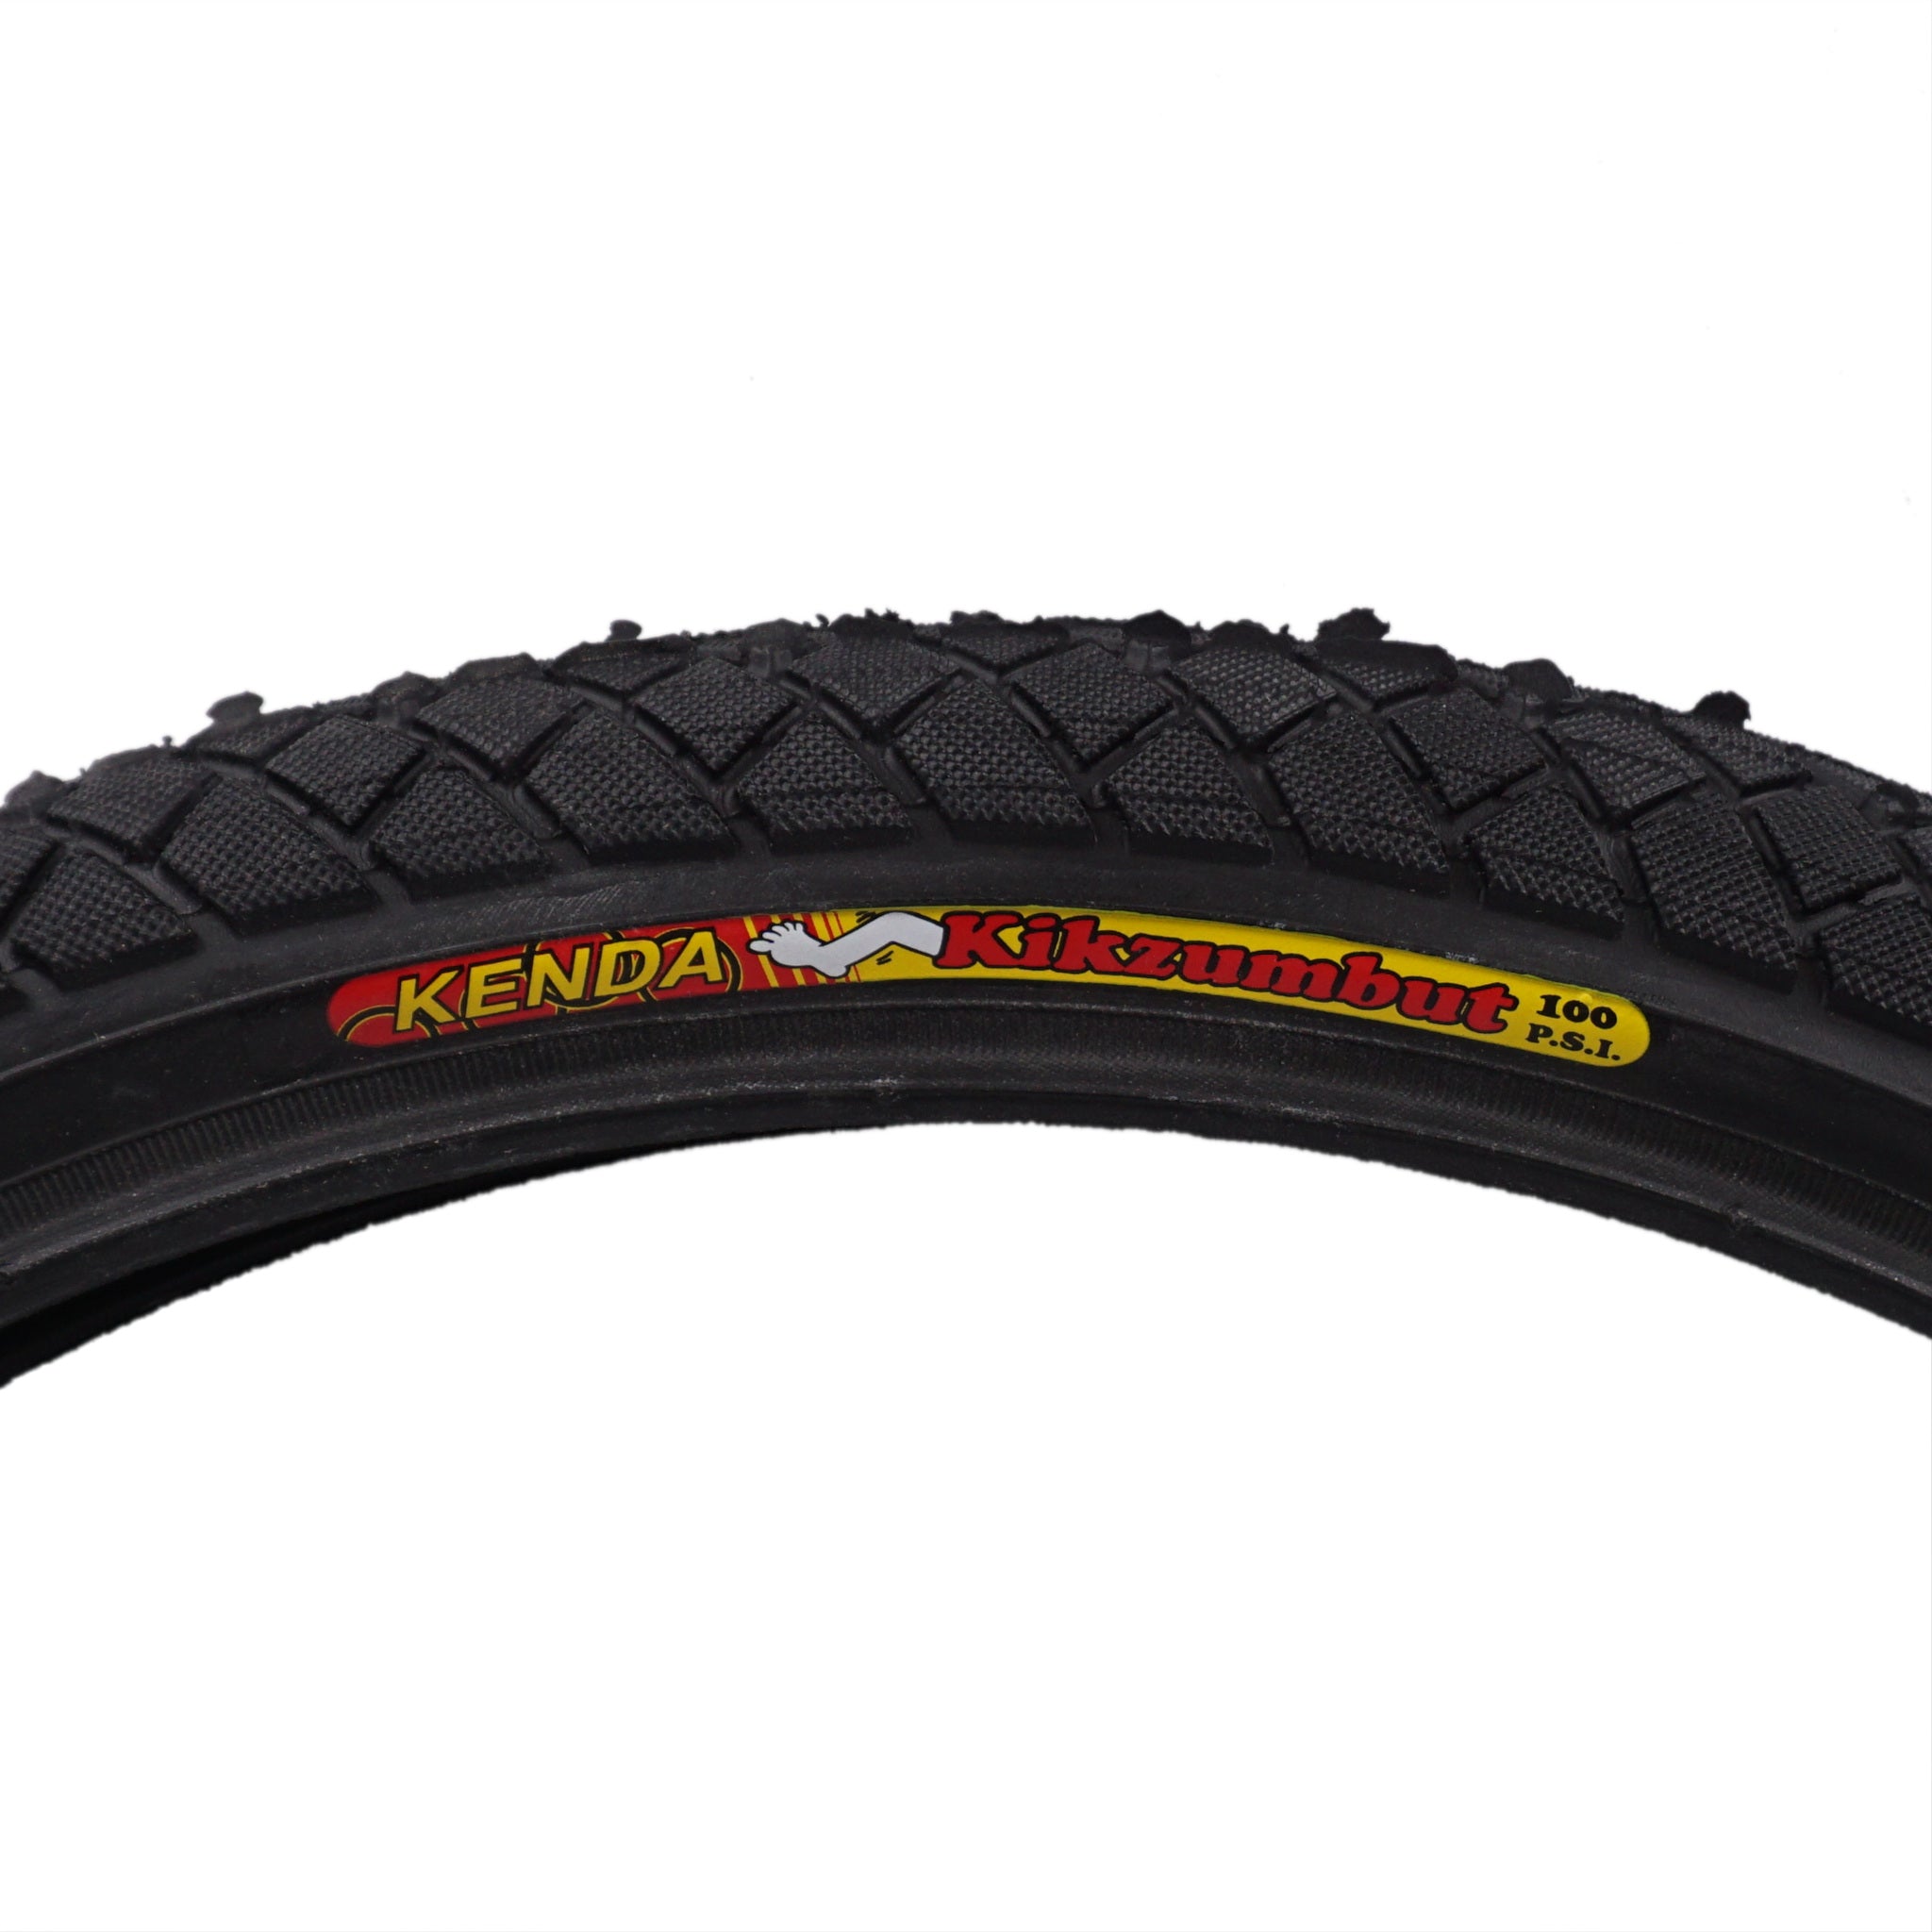 Kenda Kikzumbut K893 20" x 1.95" Blackwall BMX Bike Tire Freestyle 100psi - The Bikesmiths